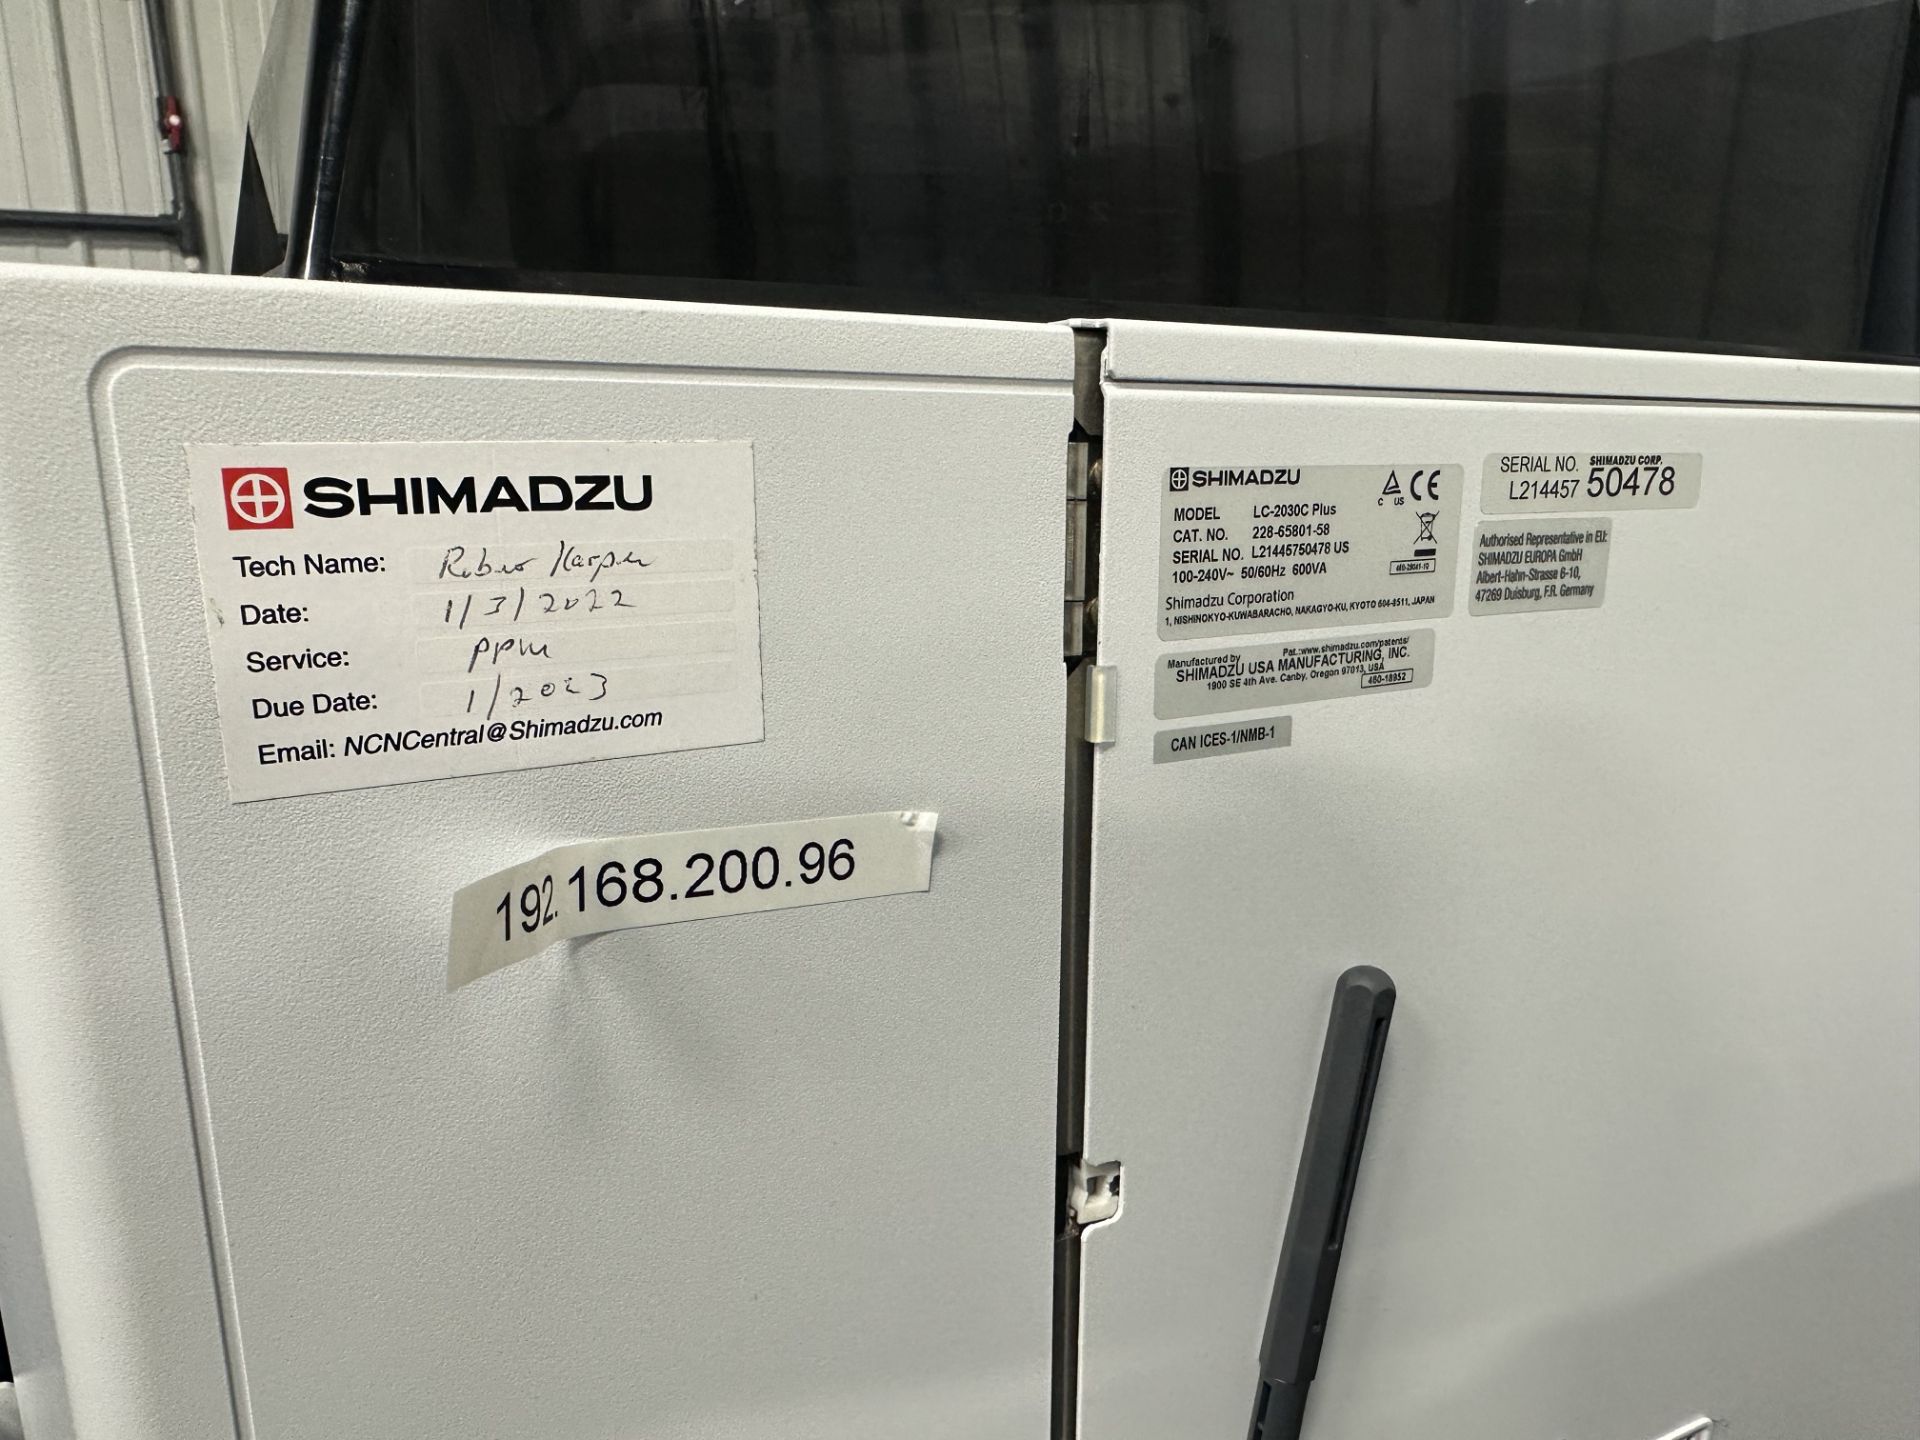 New Shimadzu HPLC Unit. Model LC-2030C Plus Prominence i w/ Fluorescence Detector & AMETEK POWERVAR - Image 11 of 13